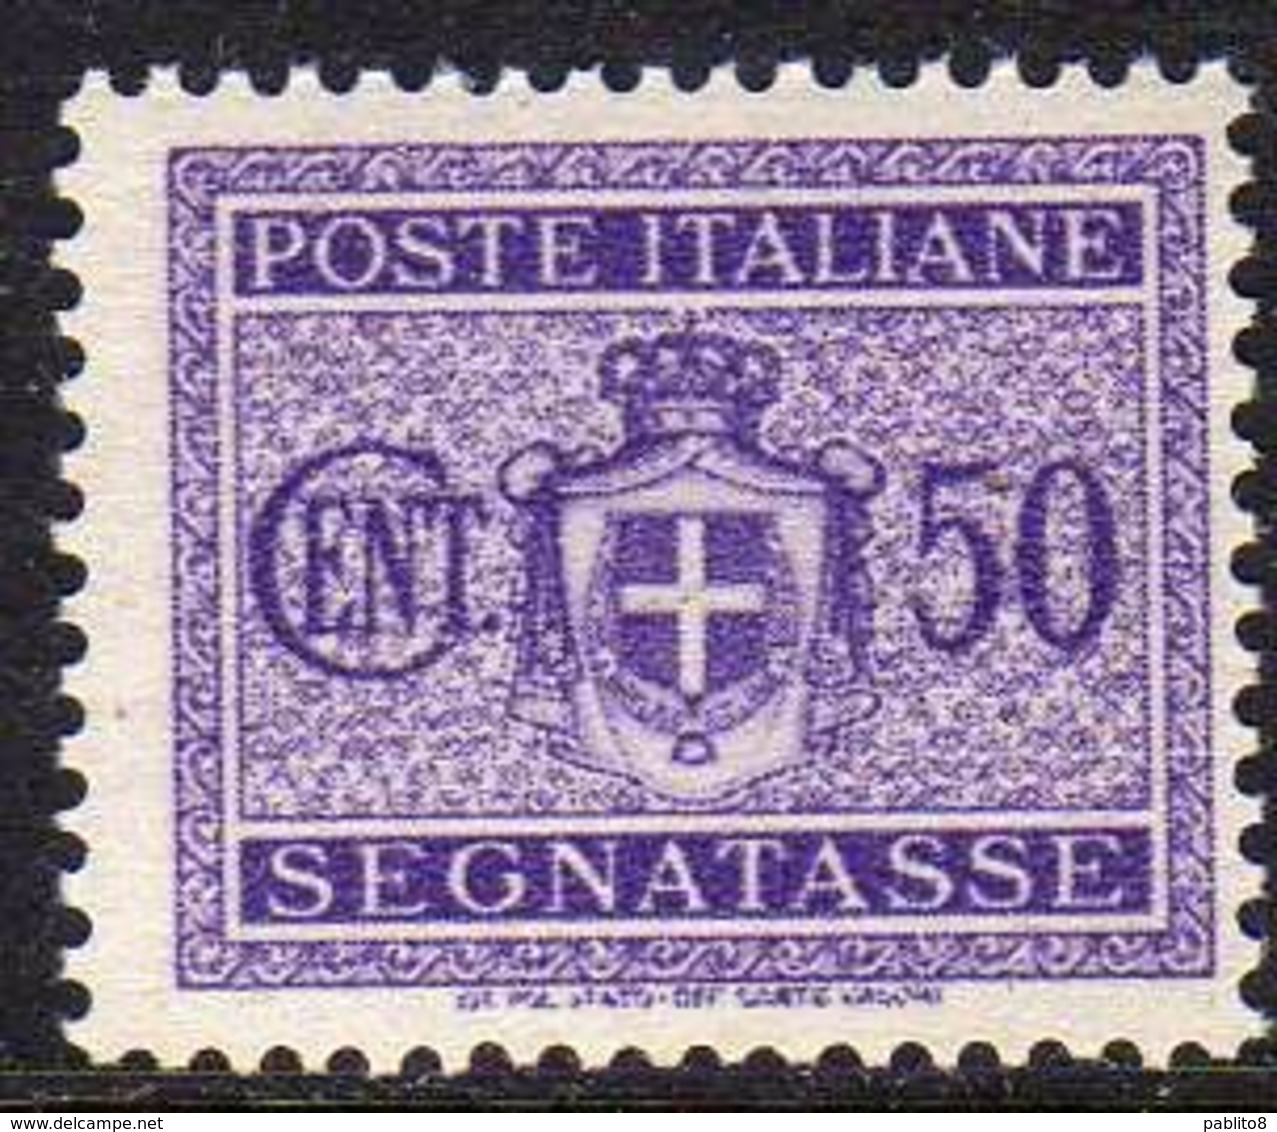 ITALIA REGNO ITALY KINGDOM 1945 LUOGOTENENZA SEGNATASSE POSTAGE DUE TASSE TAXE SENZA FILIGRANA UNWATERMARK CENT. 50c MNH - Taxe